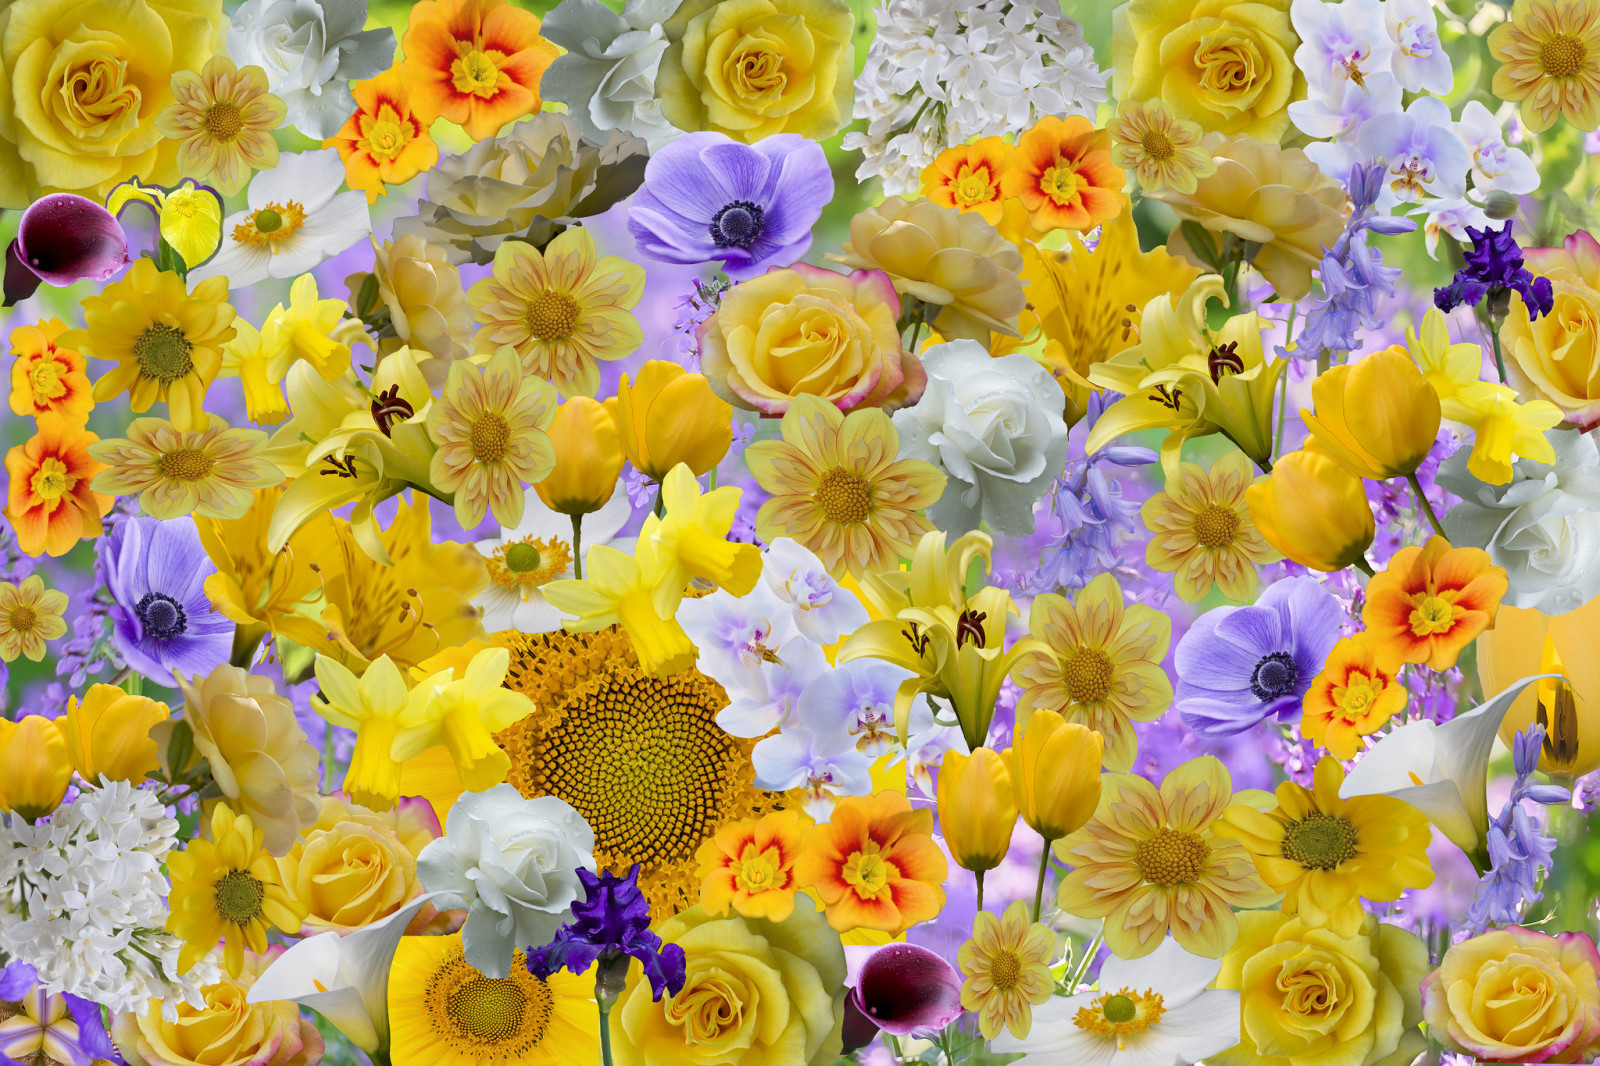 bunga-bunga, mawar, kelopak, kolase, bunga matahari, iris